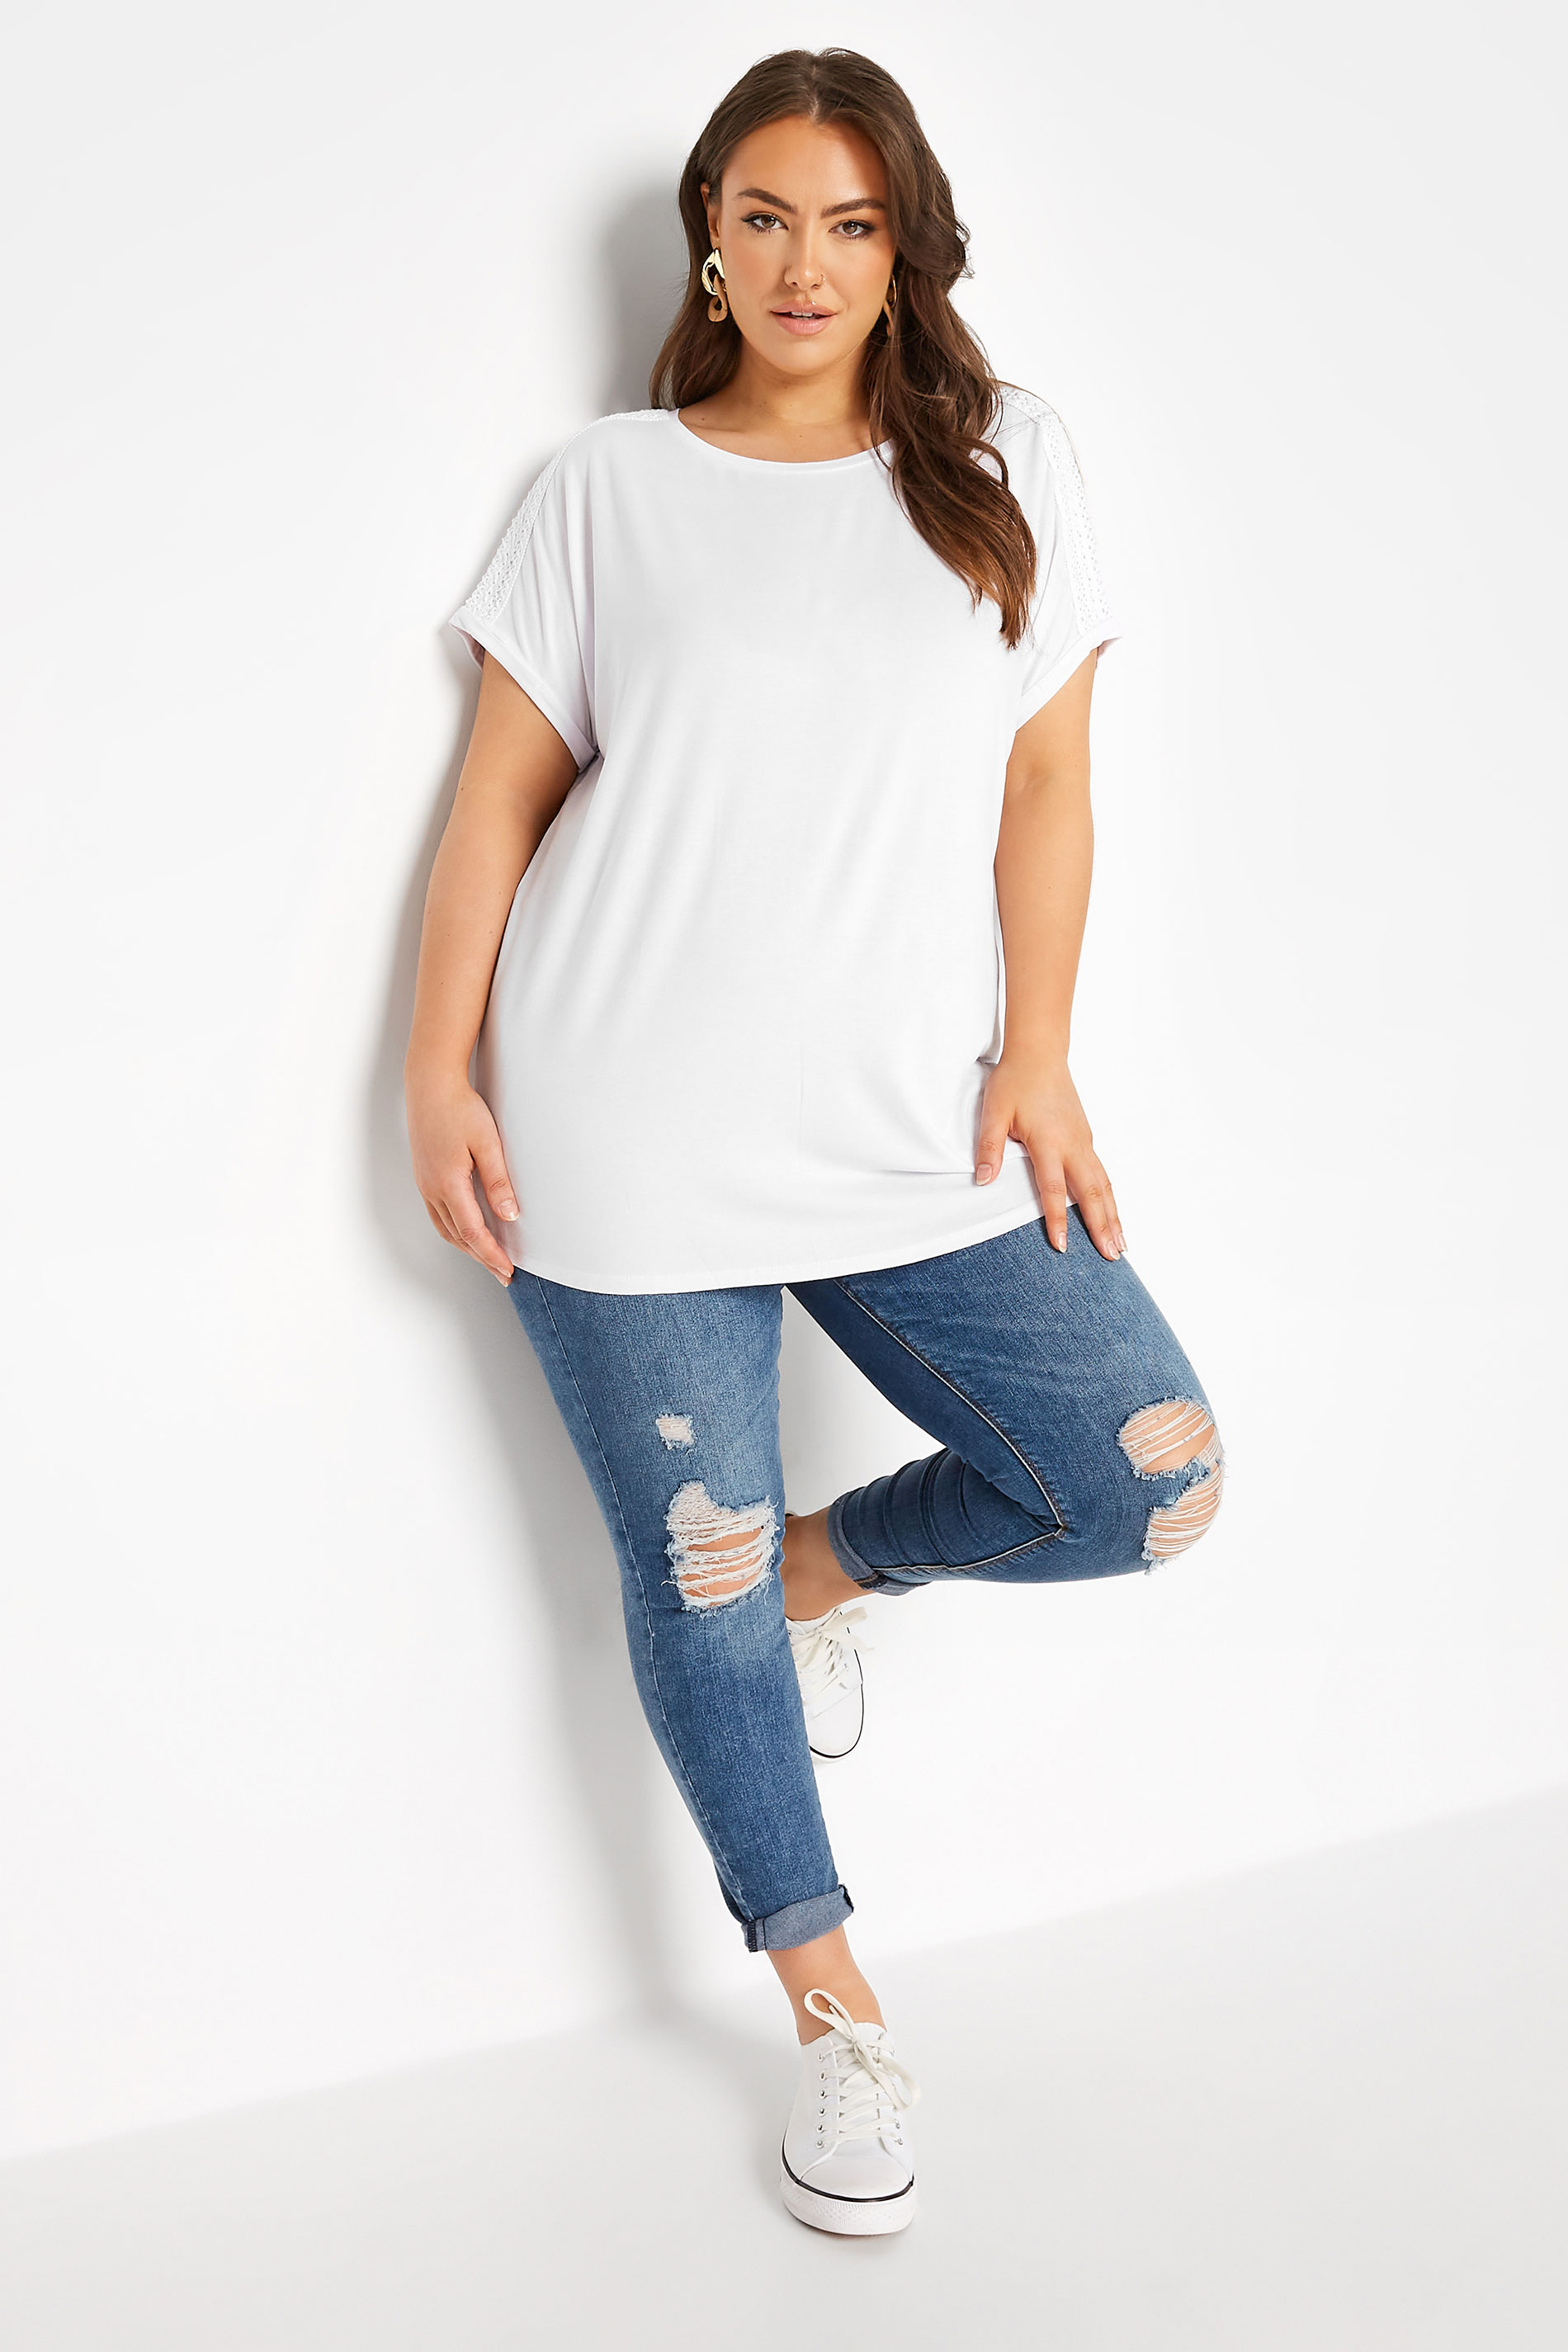 Grande taille  Tops Grande taille  T-Shirts | T-Shirt Blanc Manches Courtes à Crochet - HG90830